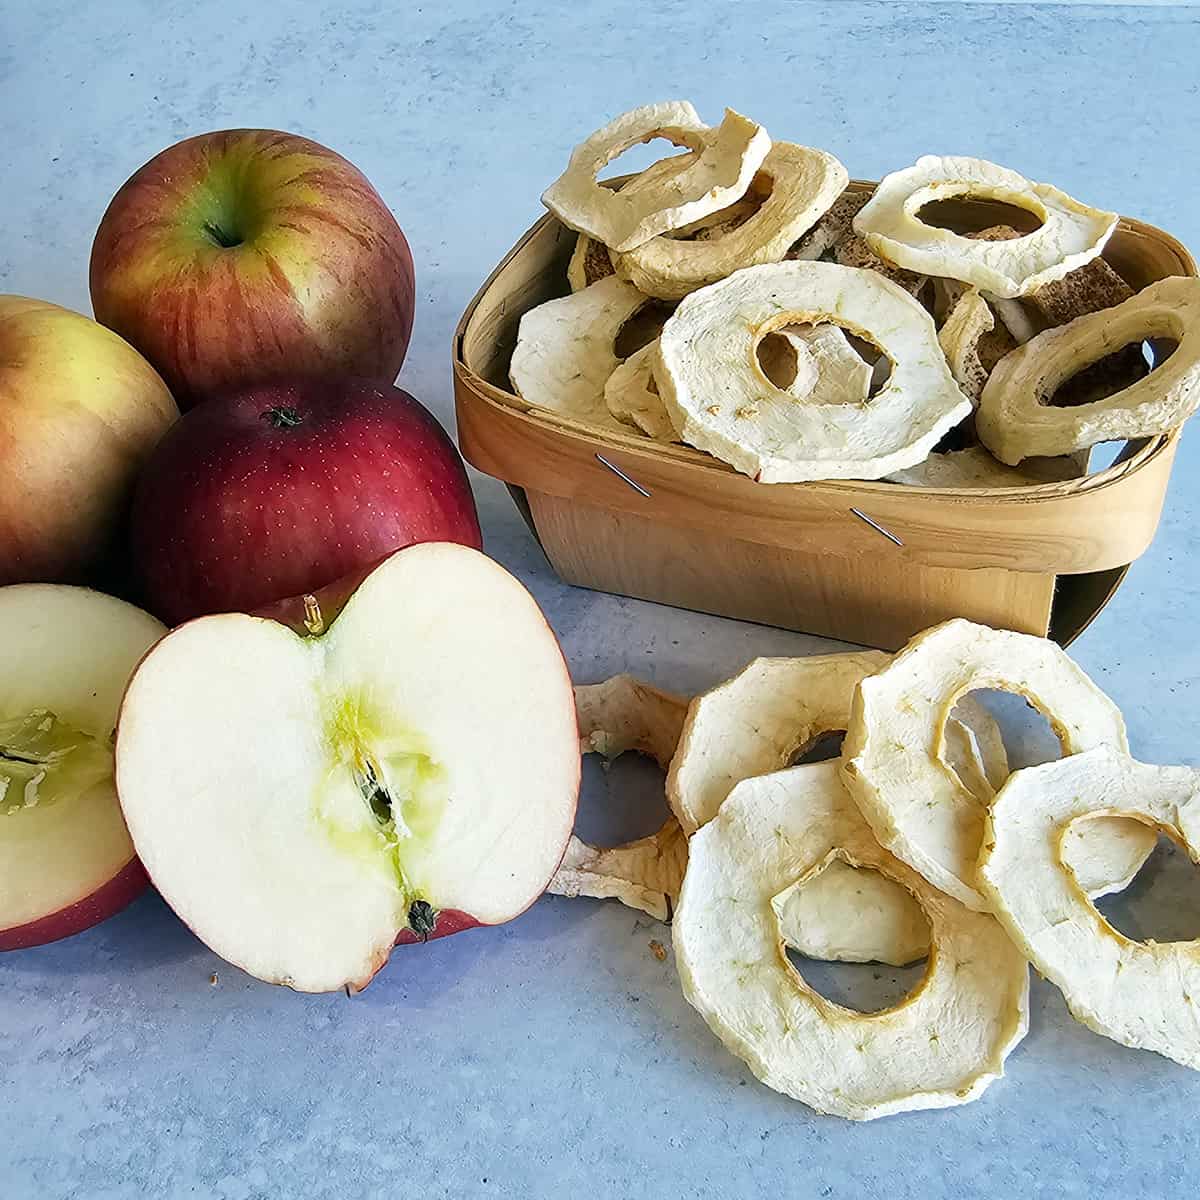 Dried apple rings in a basket.